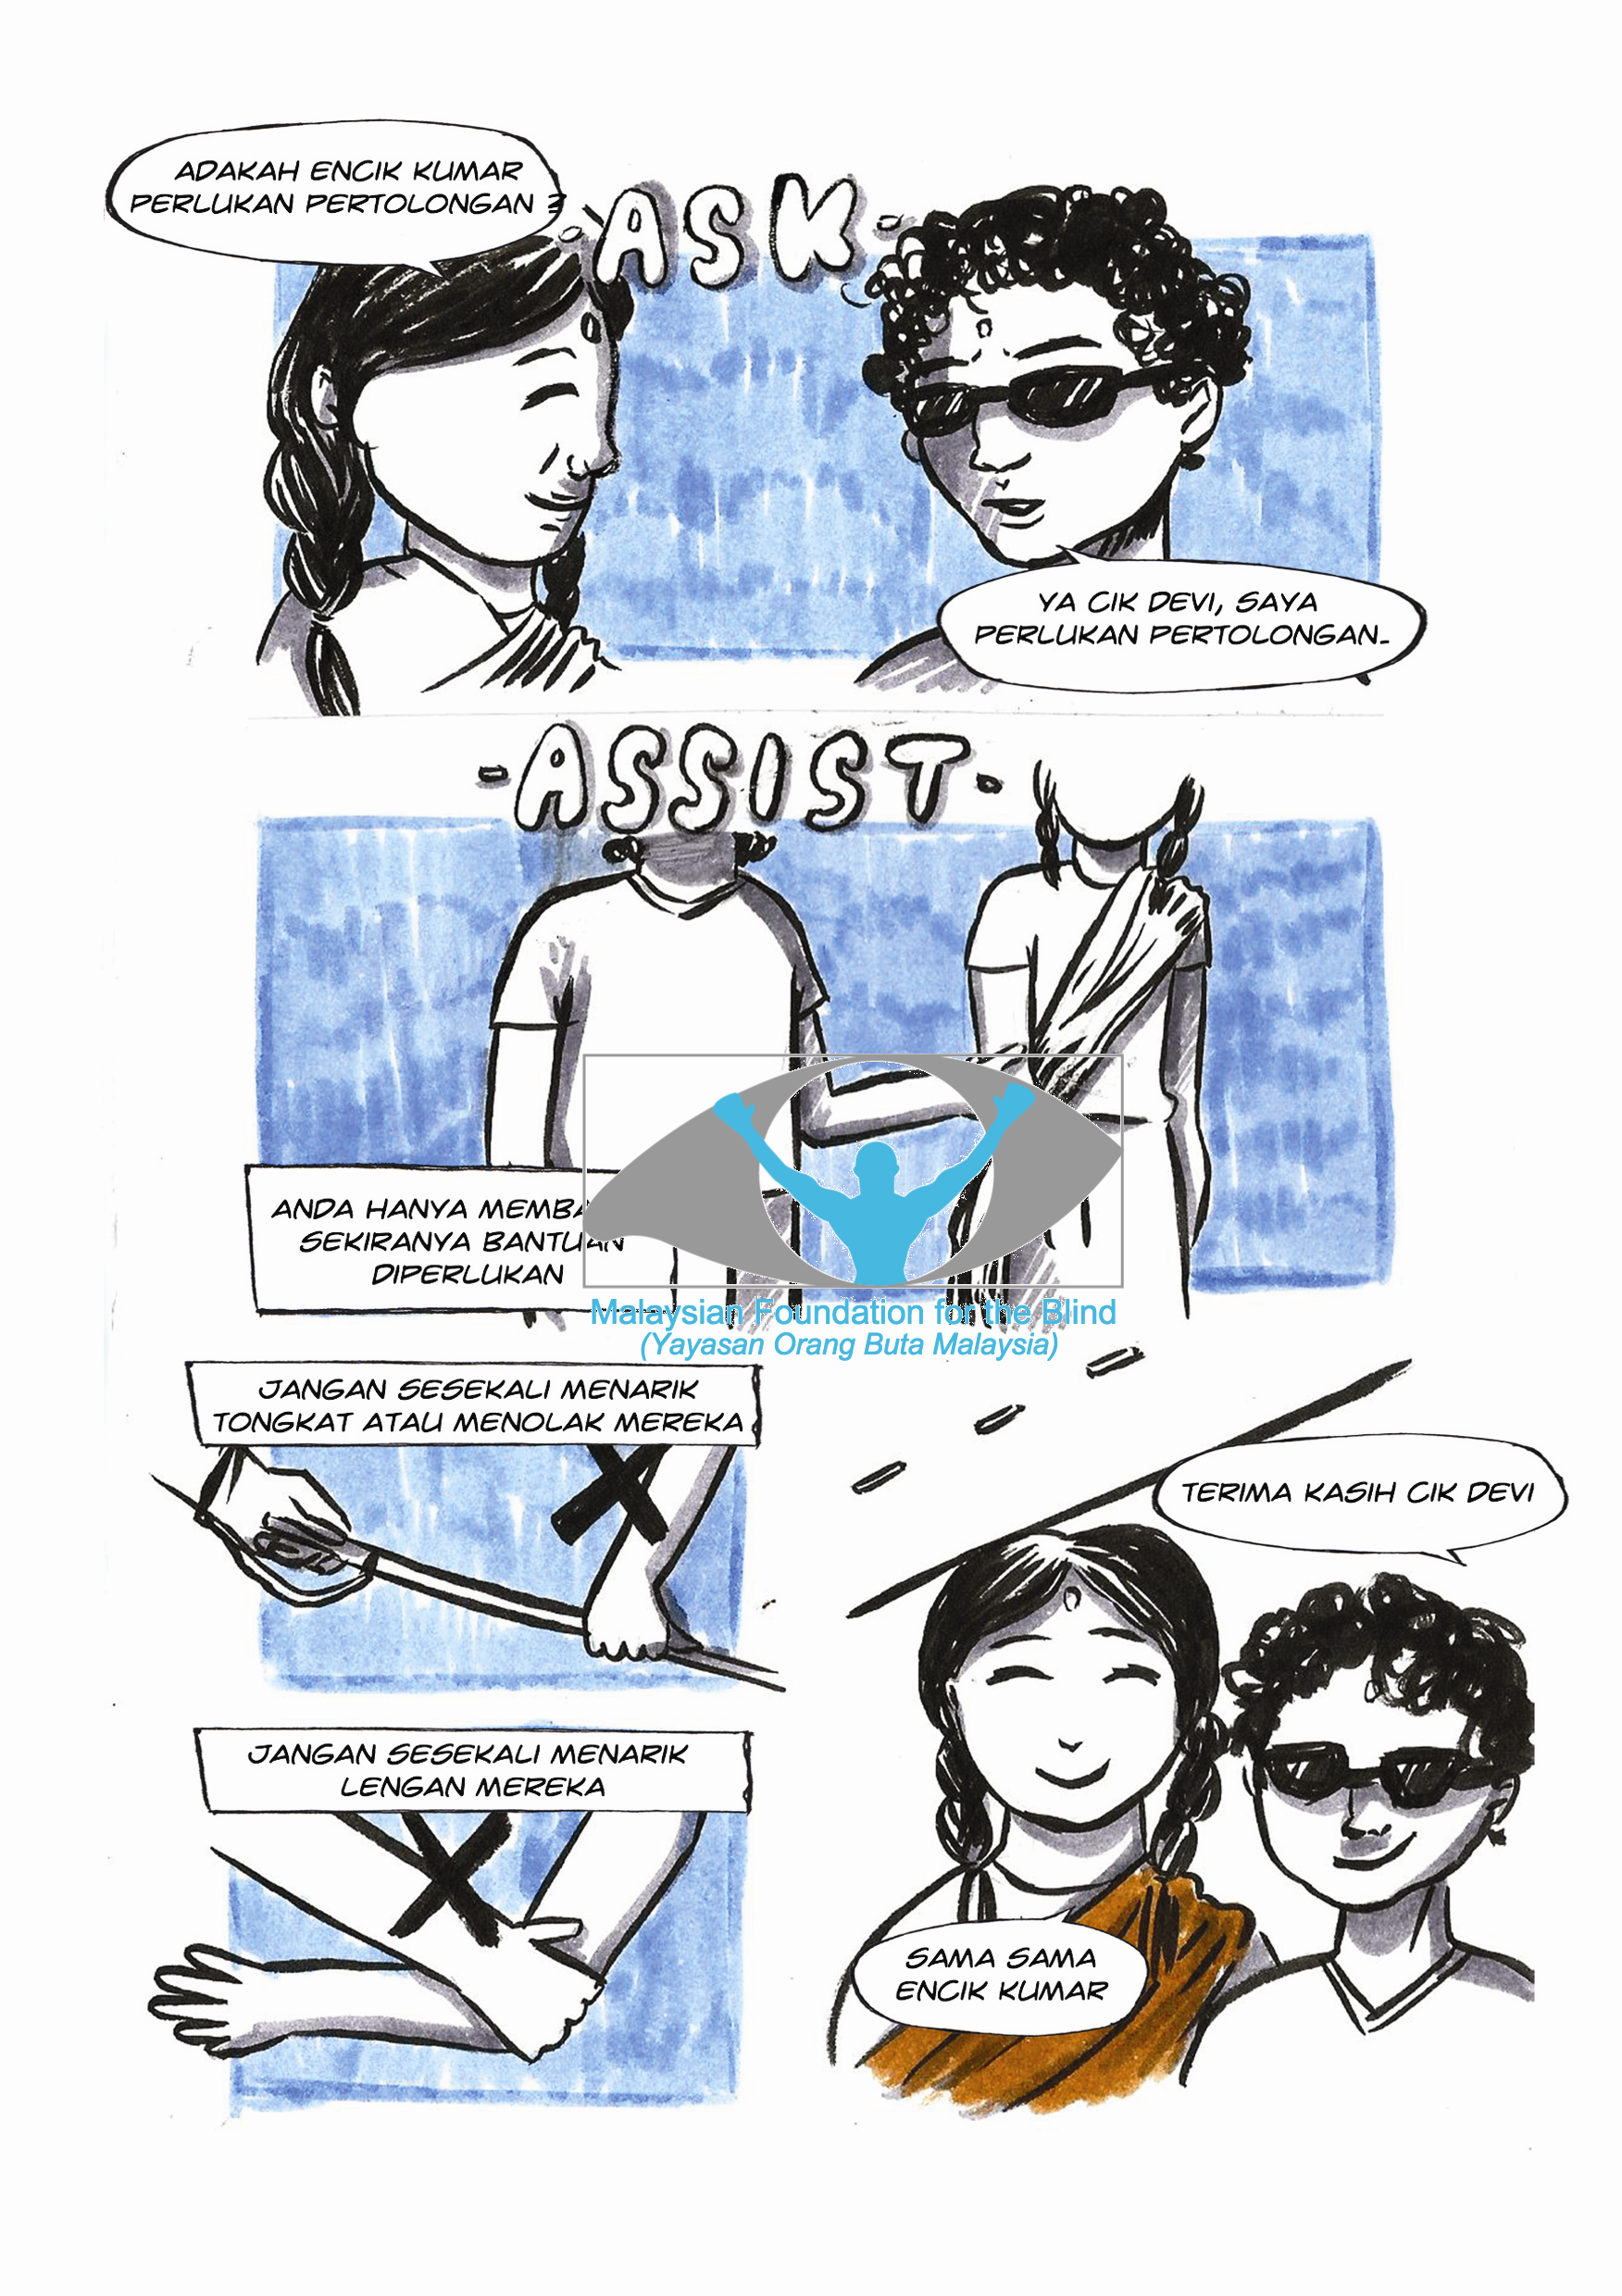 Comic Page 3